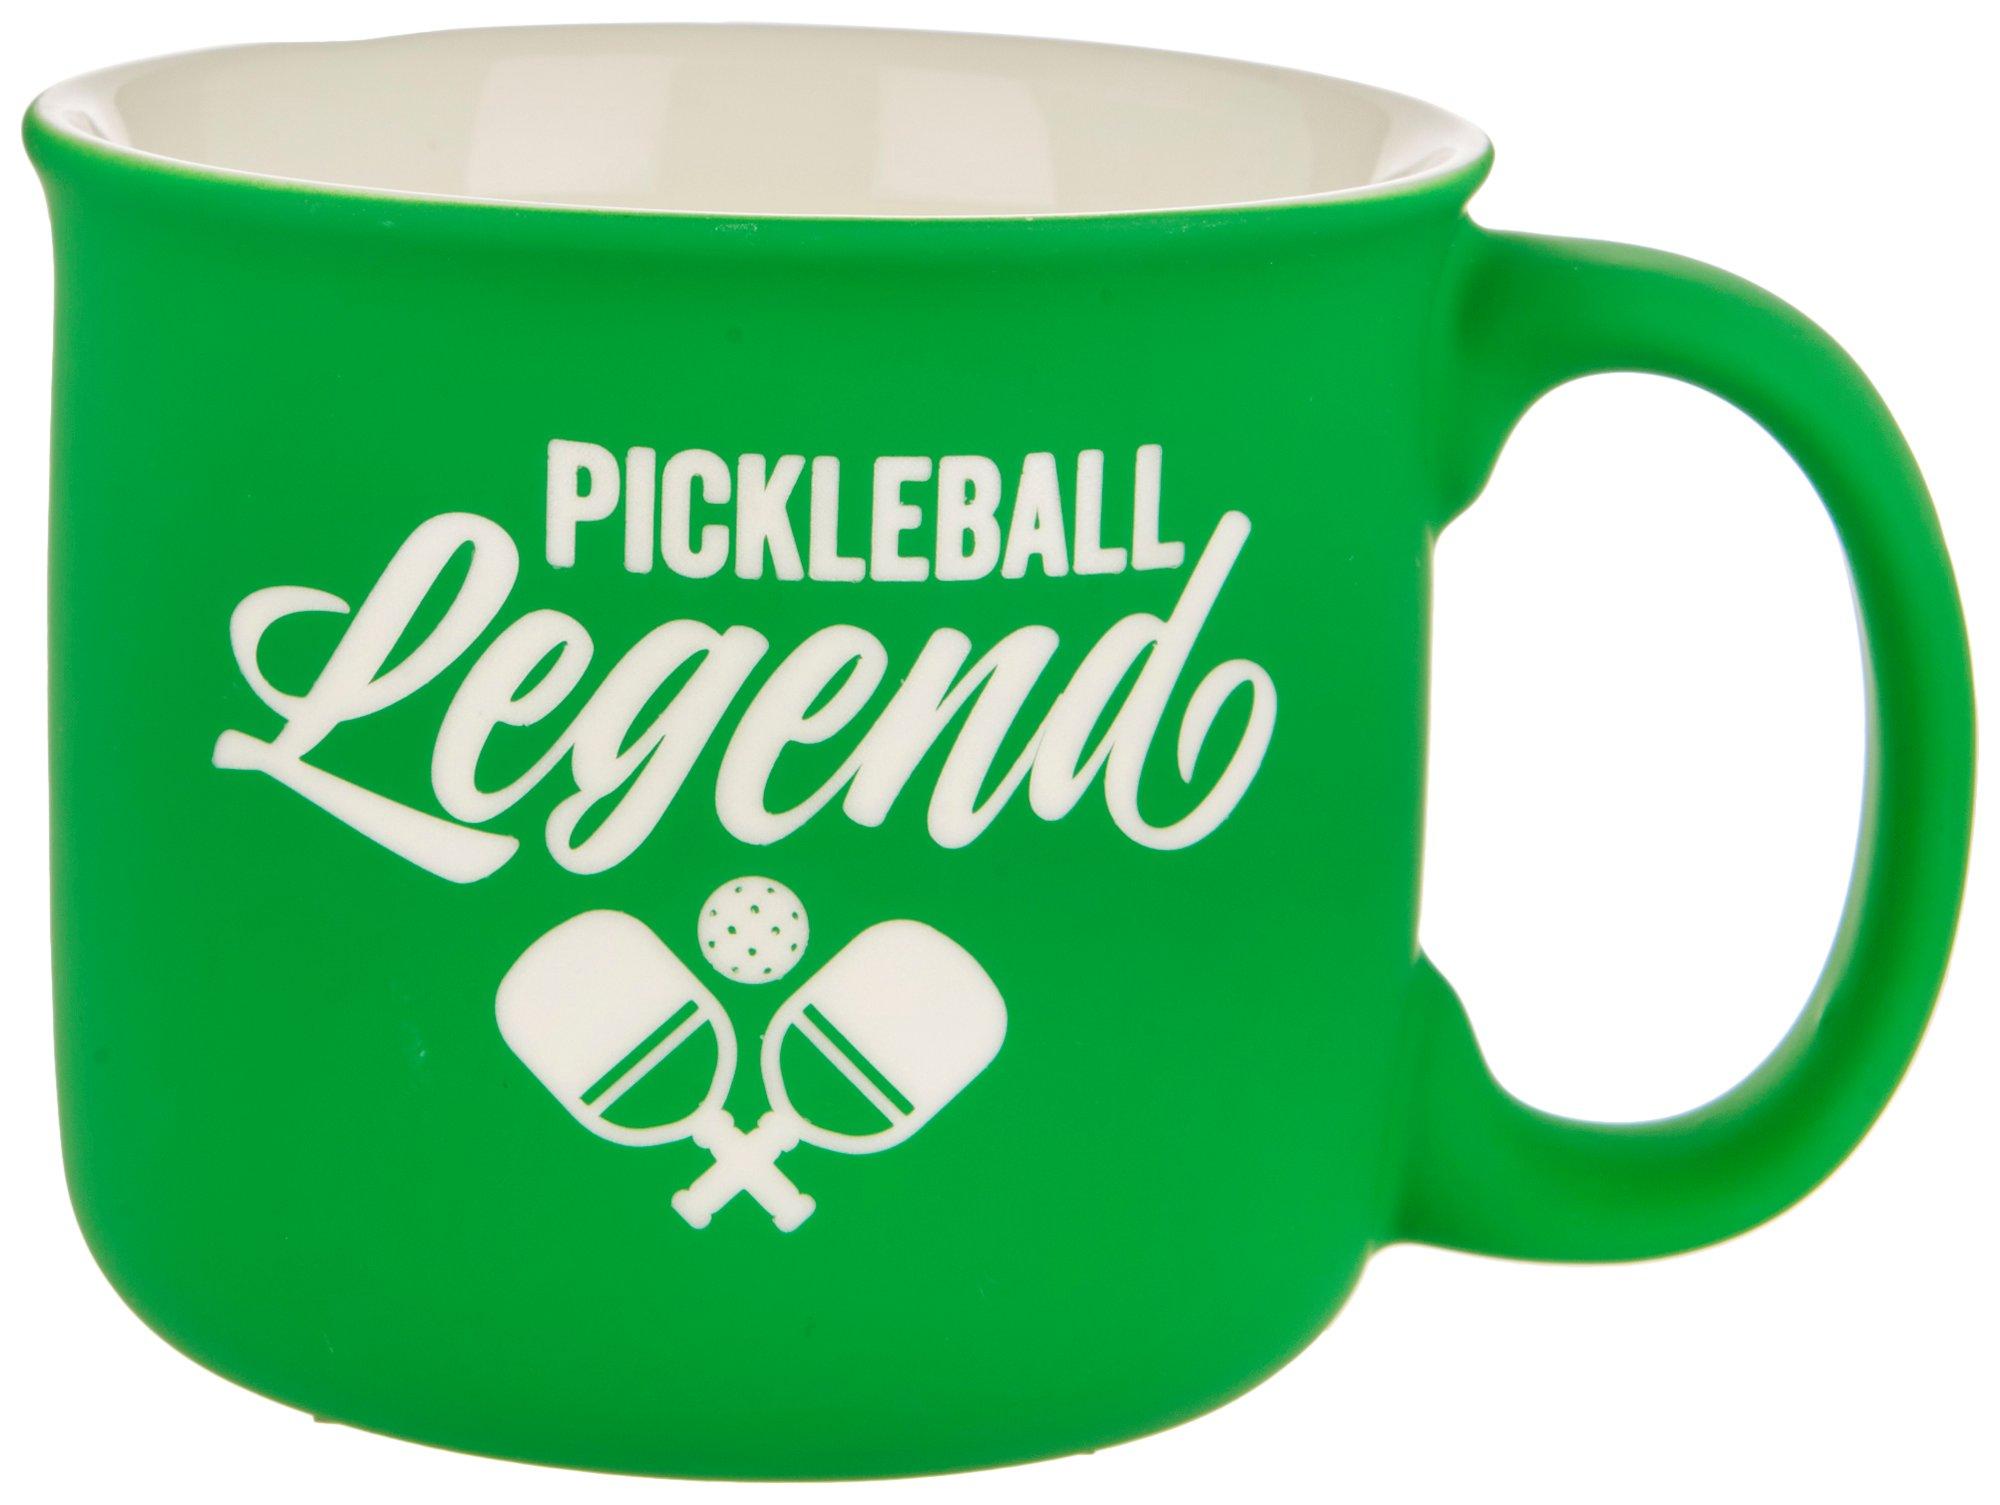 Pickleball Legend Ceramic Mug